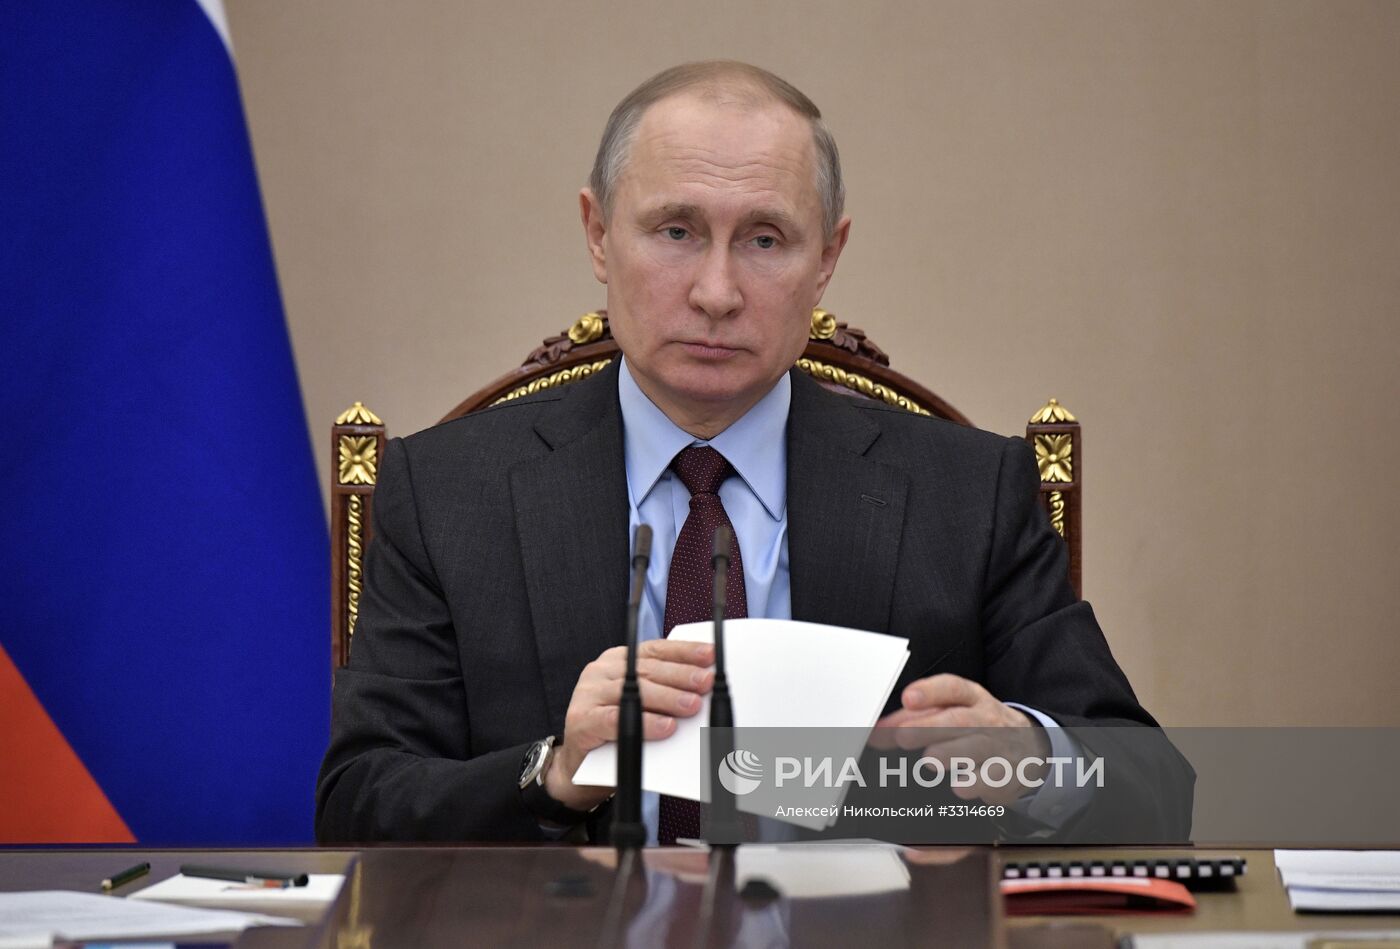 Президент РФ В. Путин провёл заседание комиссии по ВТС